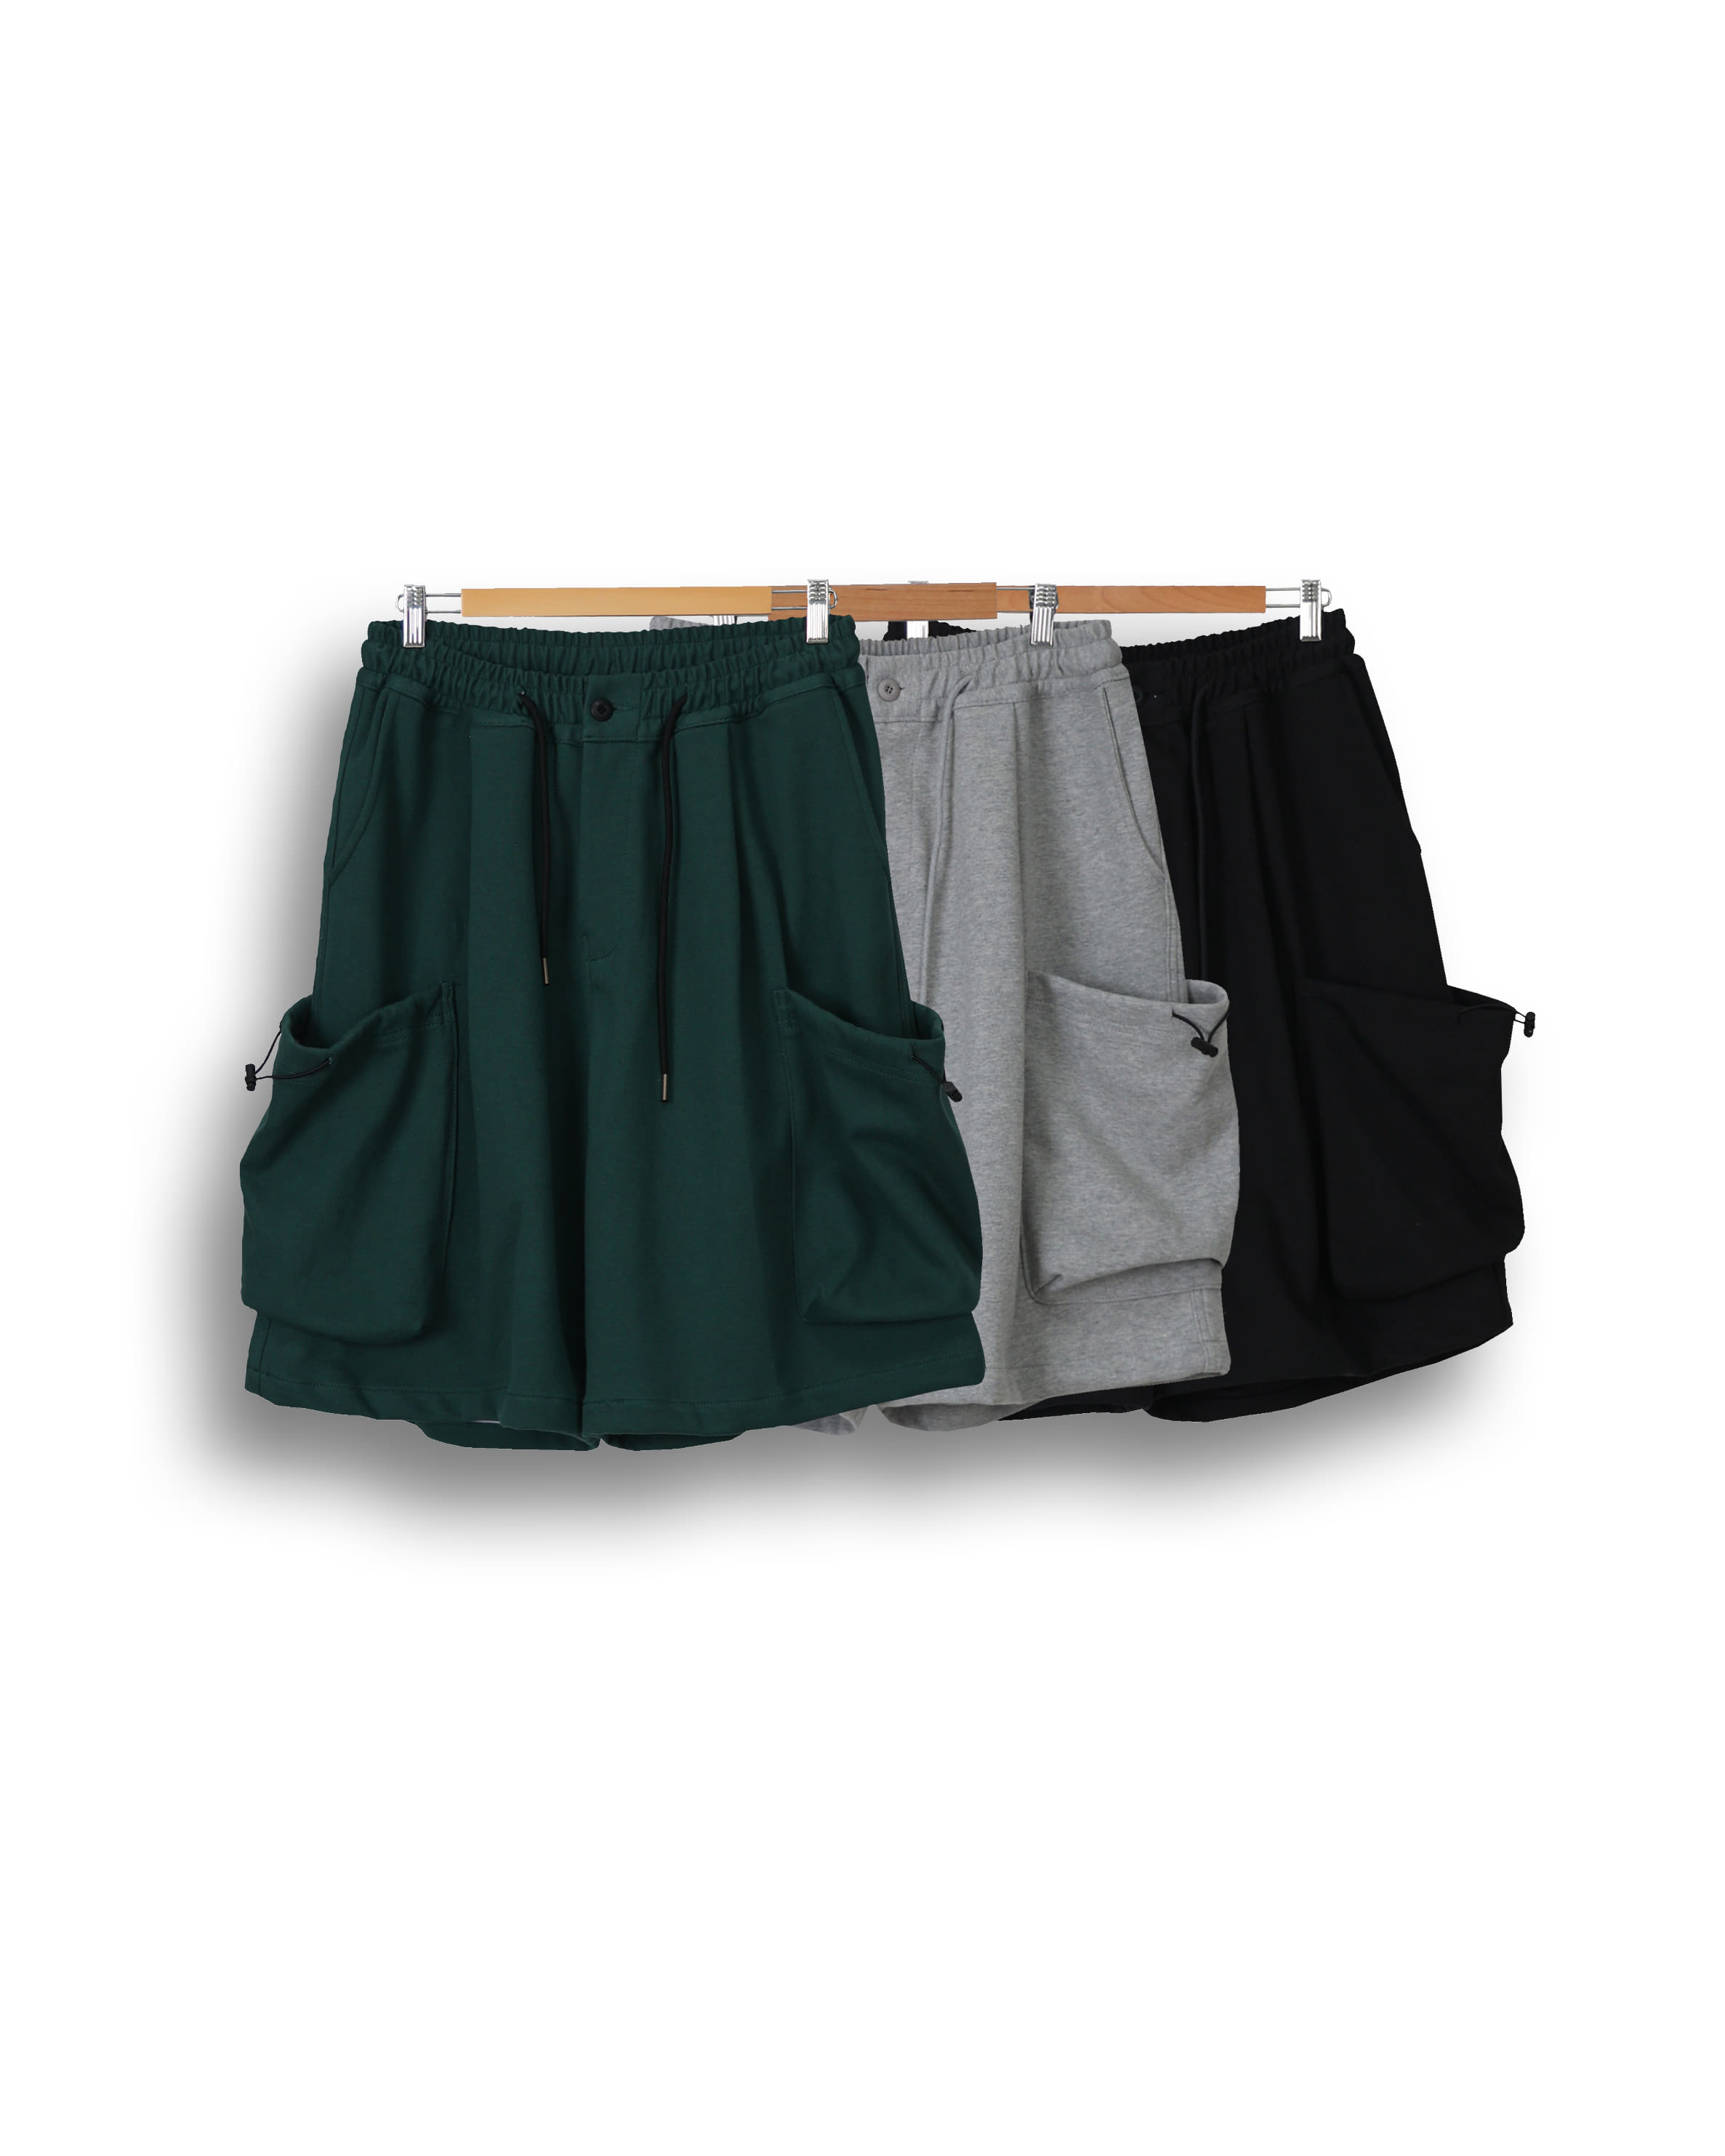 OTHER 775 String Pocket Sweat Half Pants (Black/Gray/Green)